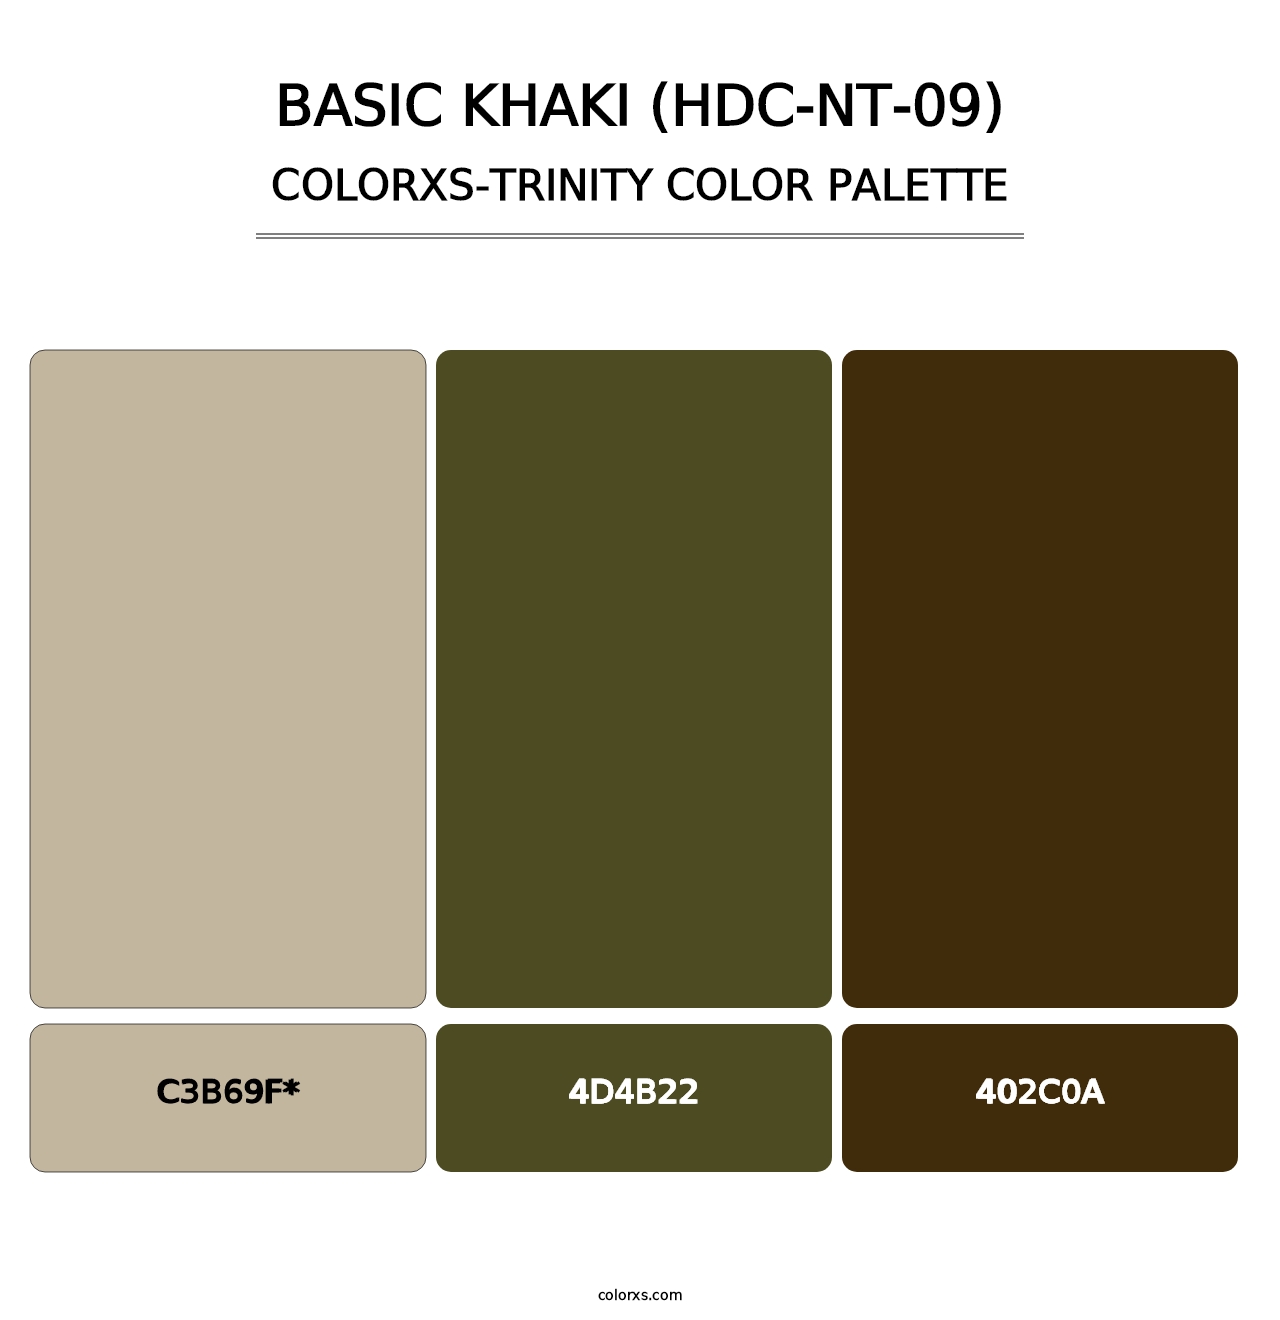 Basic Khaki (HDC-NT-09) - Colorxs Trinity Palette